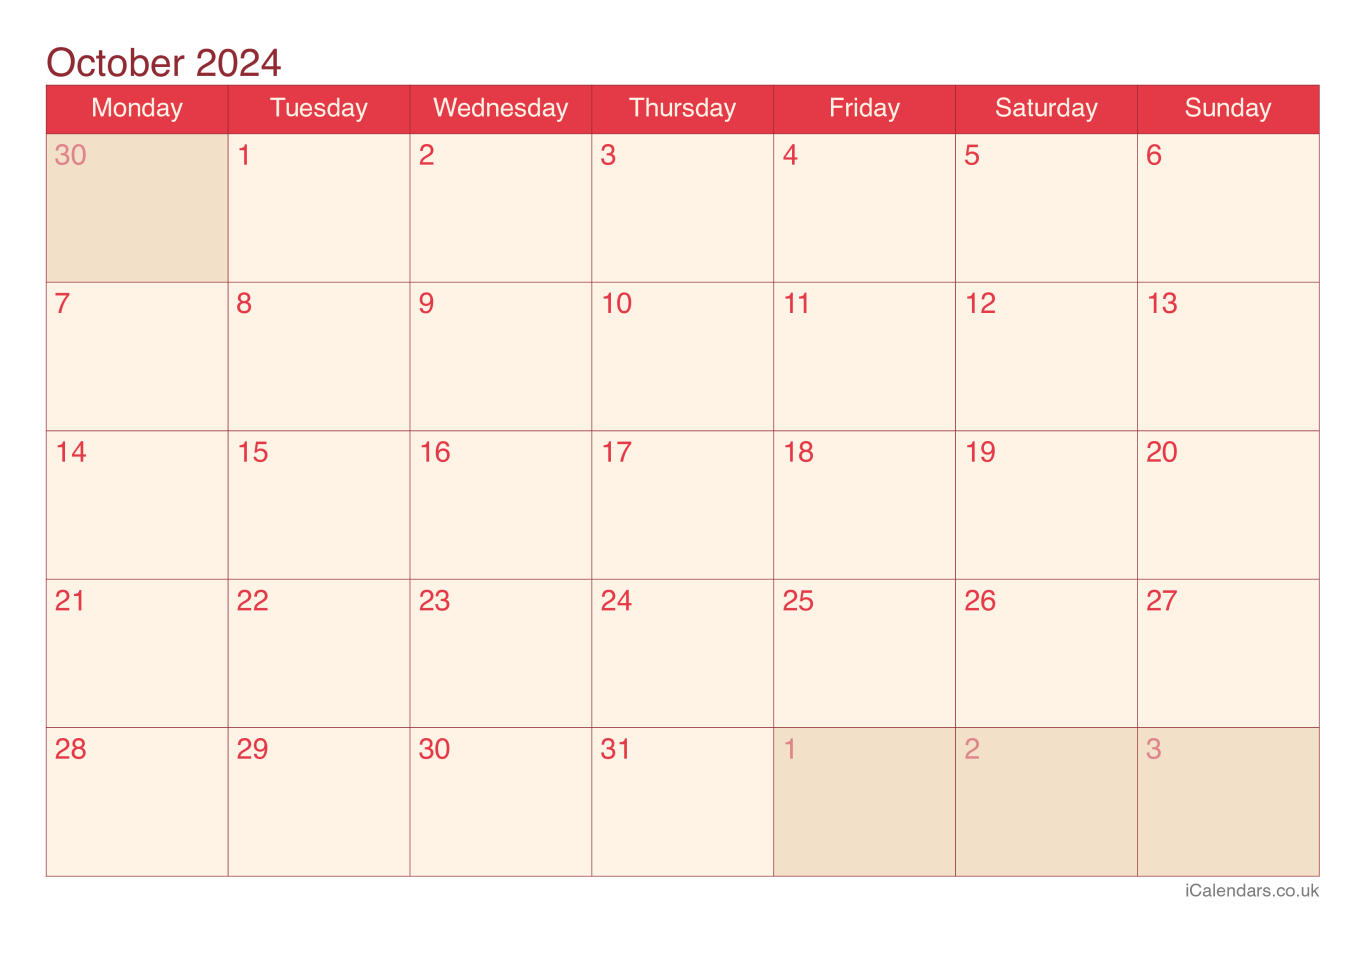 Calendar October 2024 - Cherry